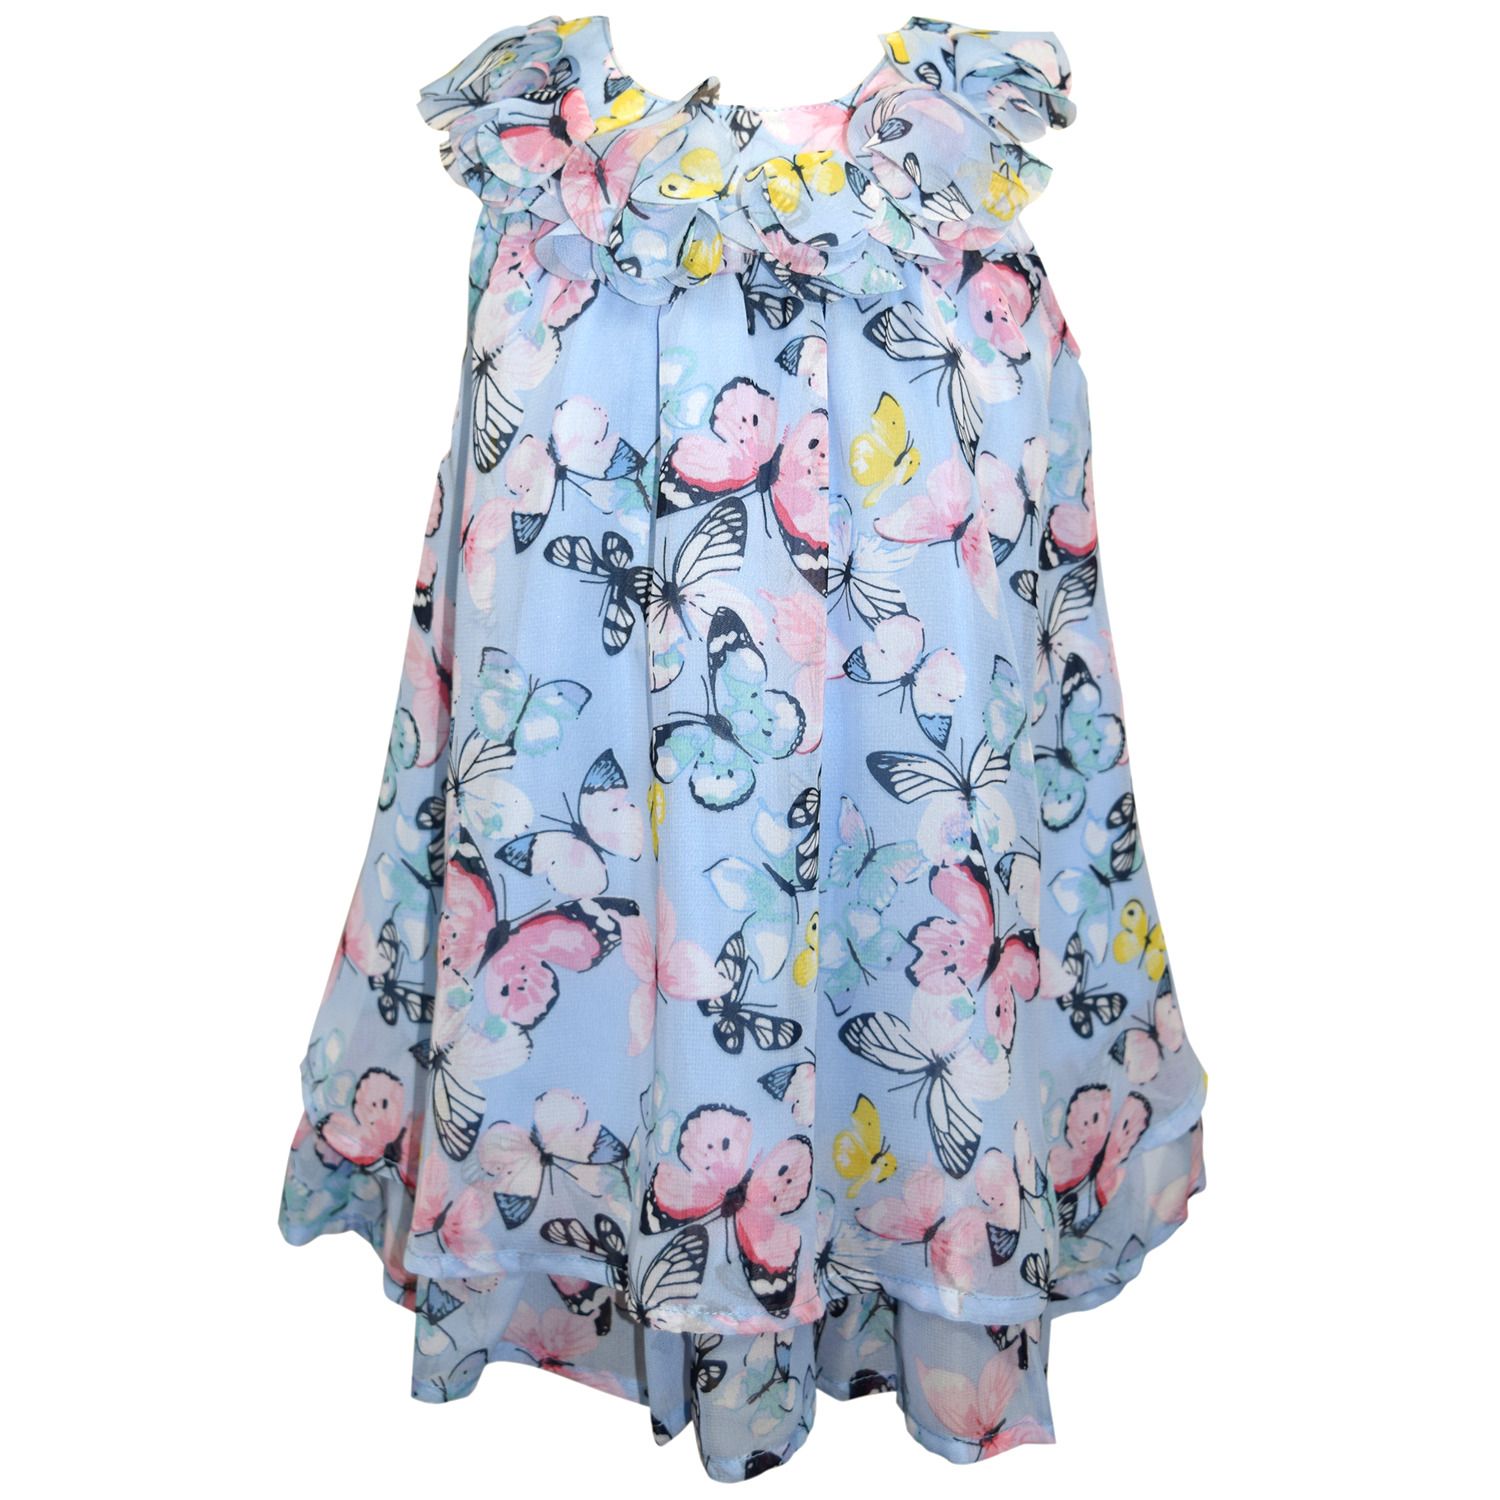 chiffon dress for baby girl